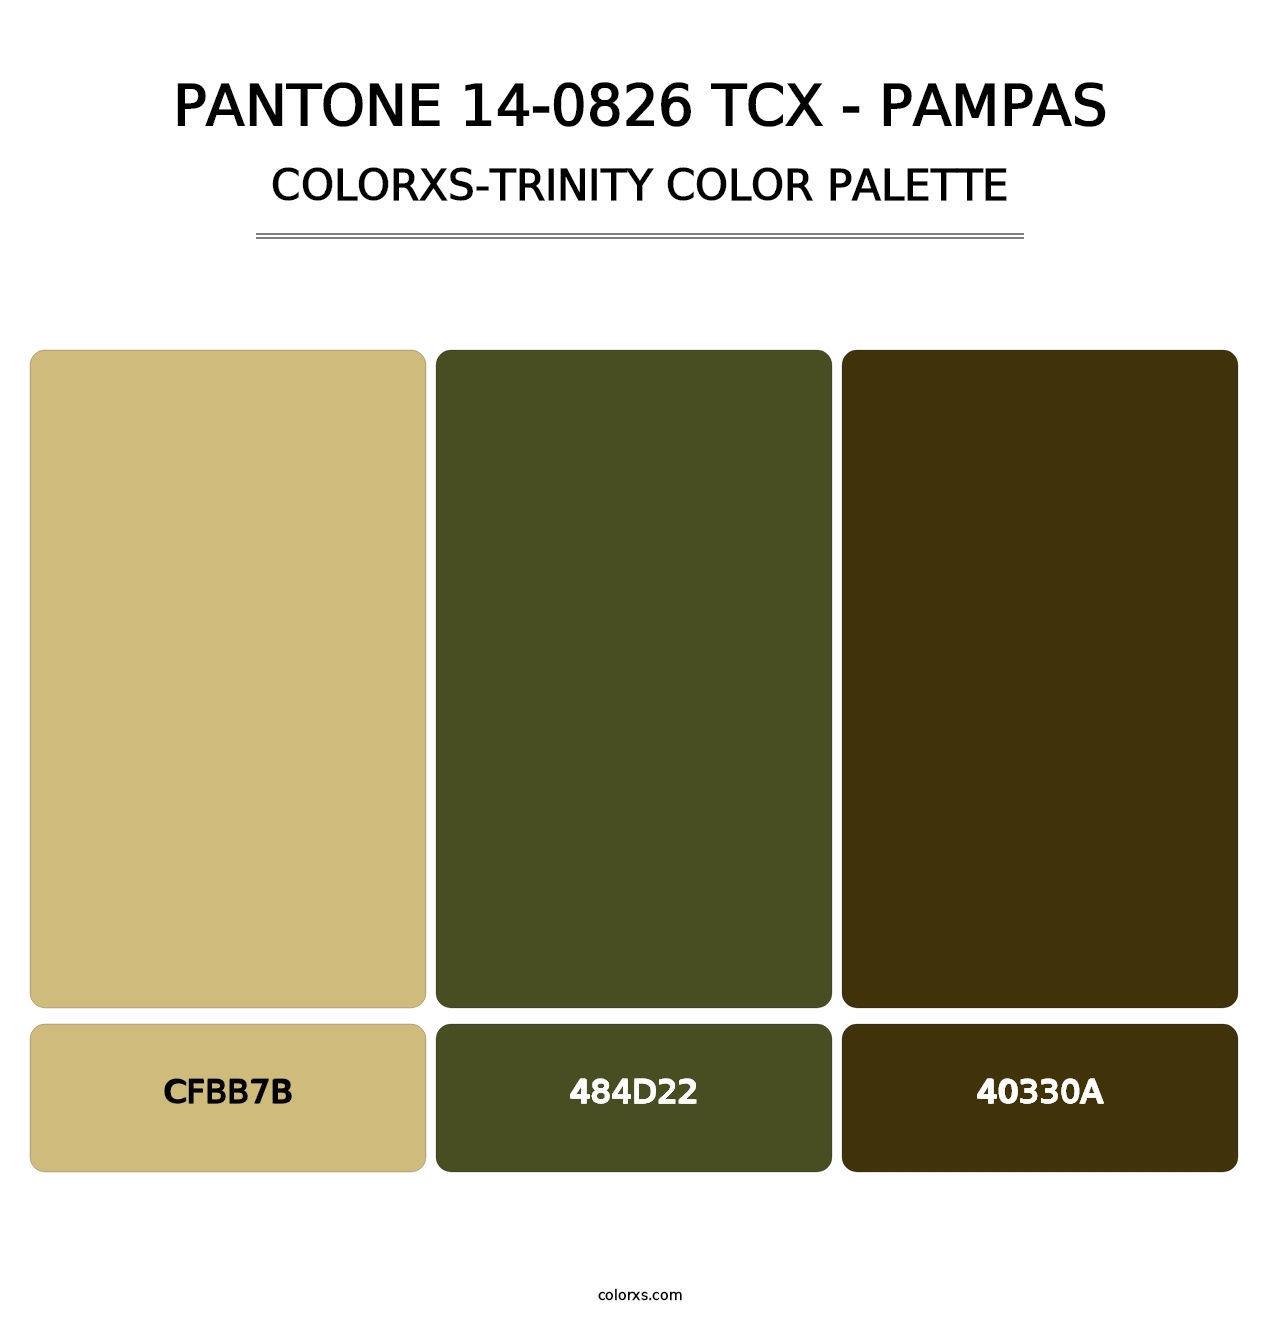 PANTONE 14-0826 TCX - Pampas - Colorxs Trinity Palette